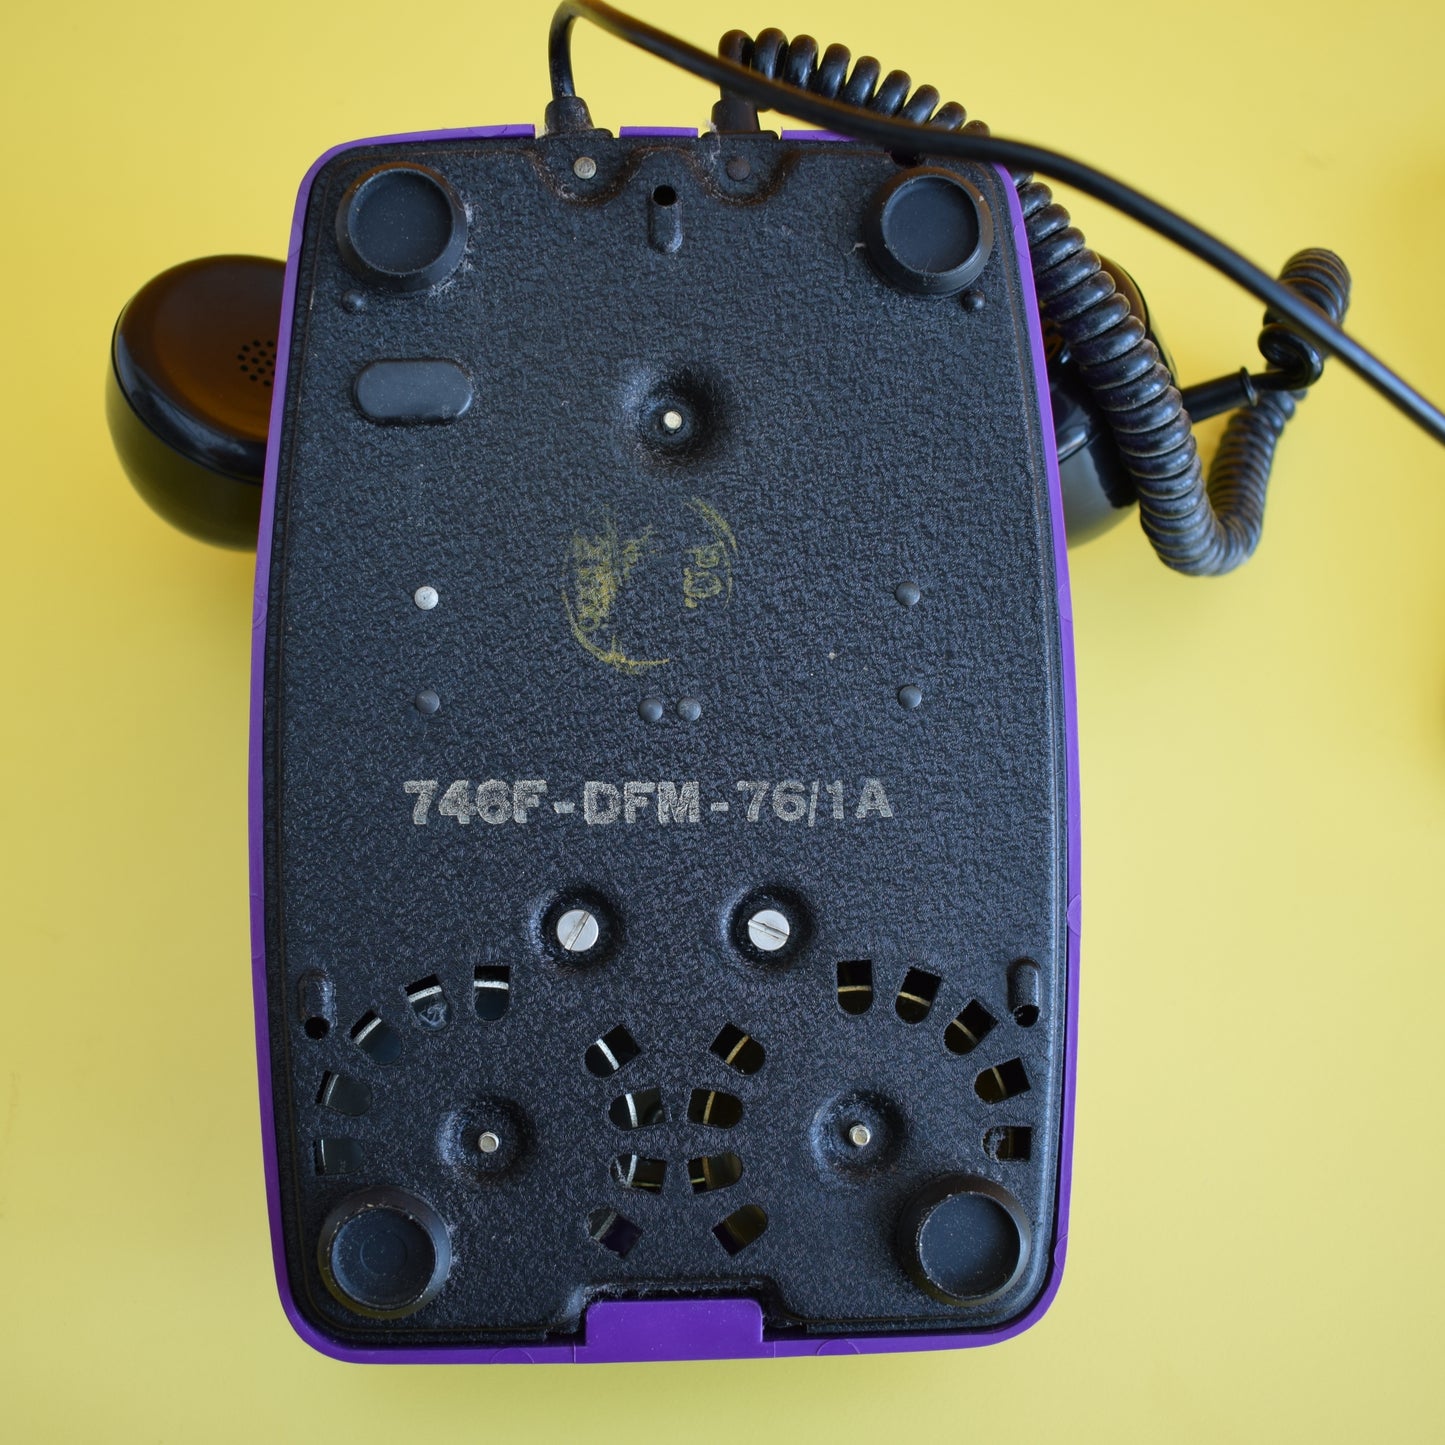 Vintage 1970s GPO Phone - Fully Working - Purple